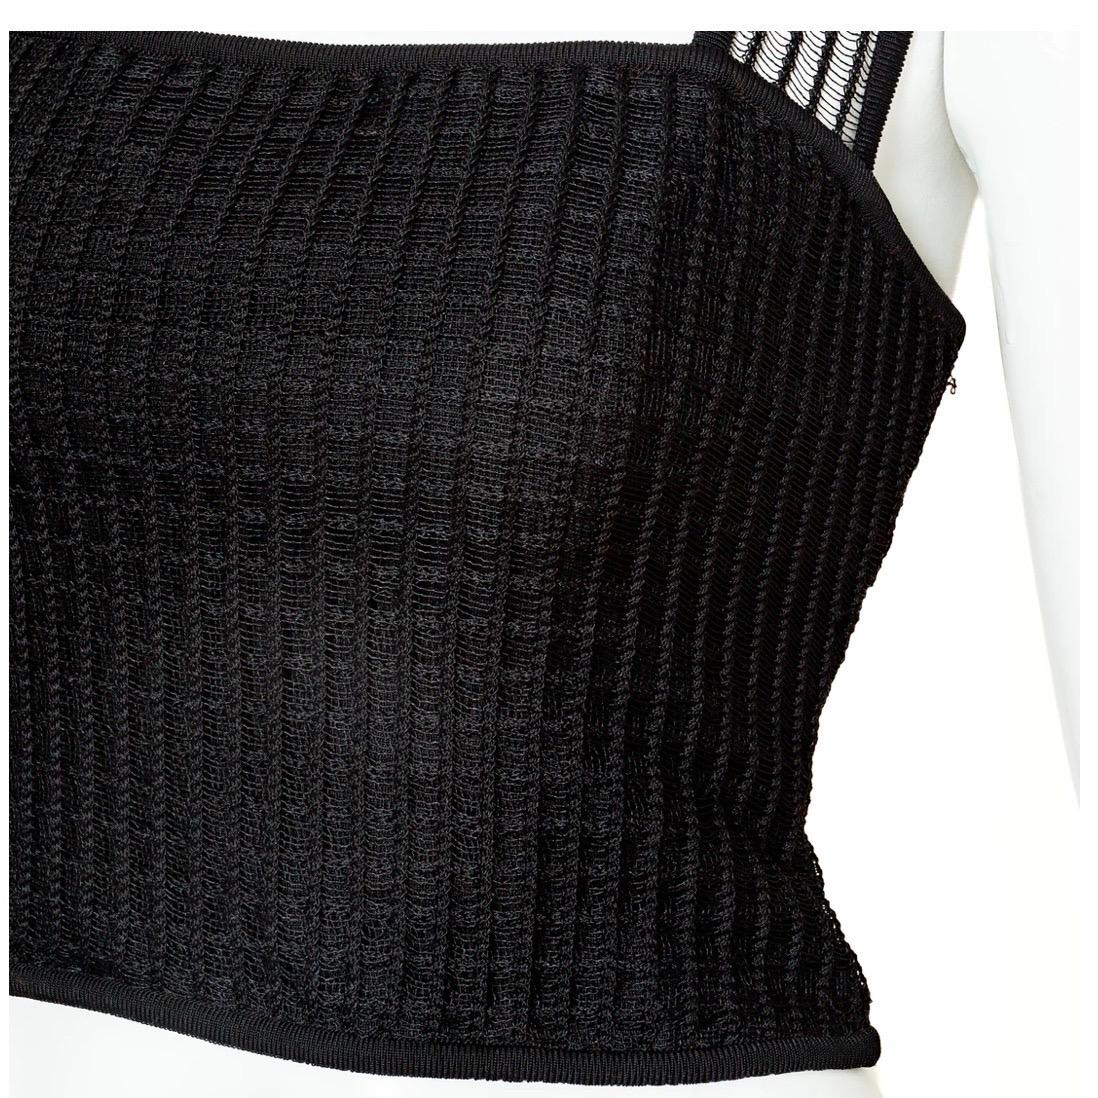 Hervé Léger Black Bodycon Top and Skirt Set Circa 1990s For Sale 8